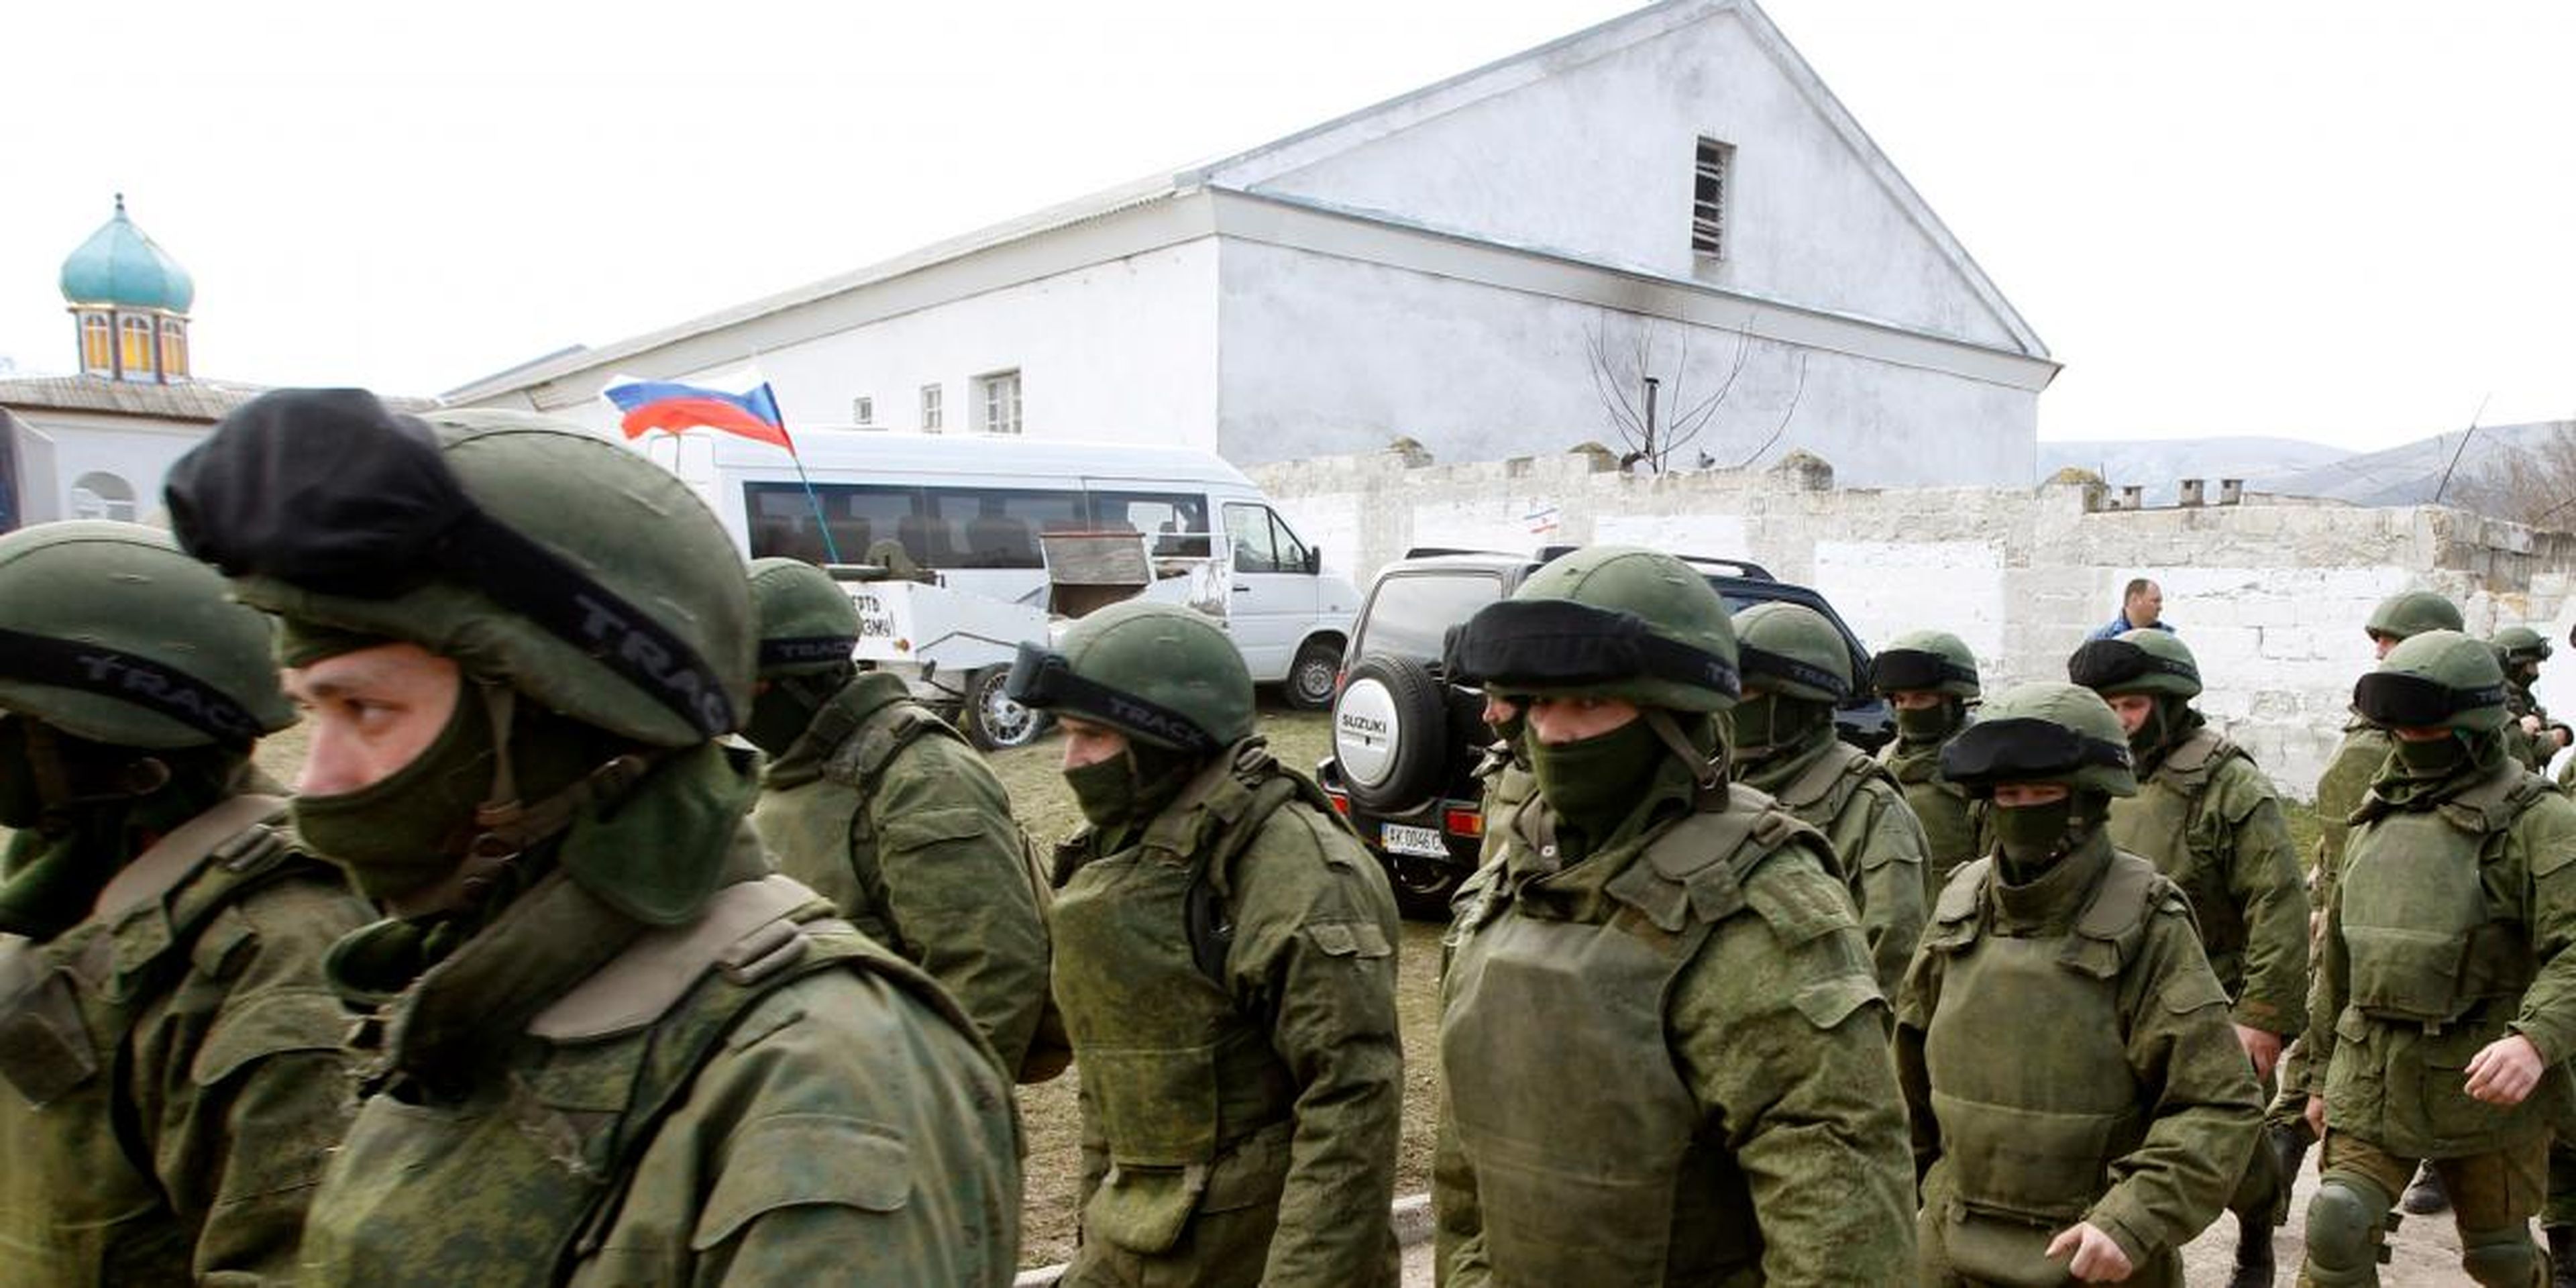 Armed men, believed to be Russian servicemen, walk outside a Ukrainian military base in Perevalnoye, near the Crimean city of Simferopol, March 14, 2014.